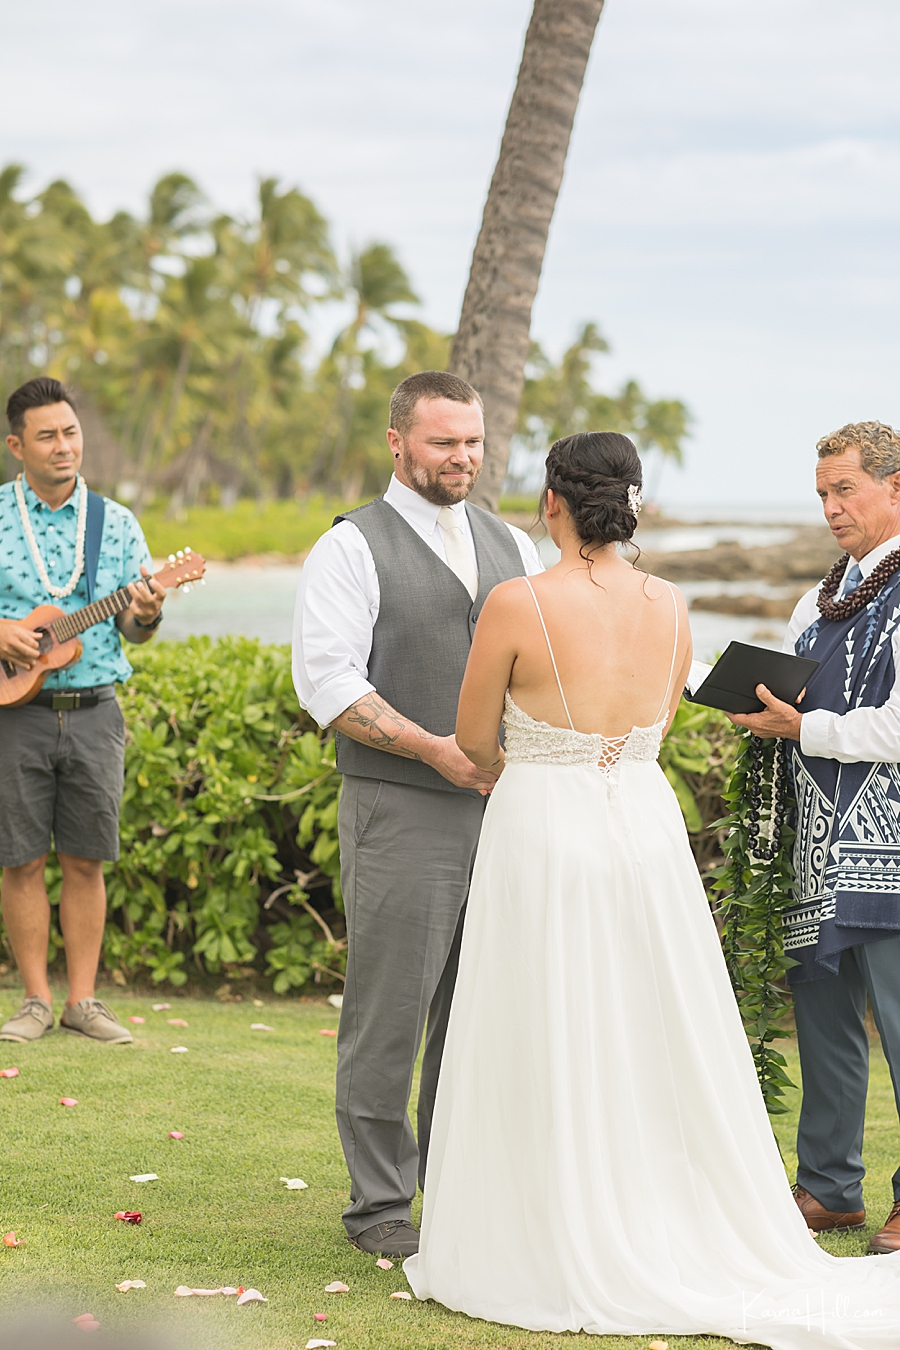 Hawaii Destination Wedding at a venue